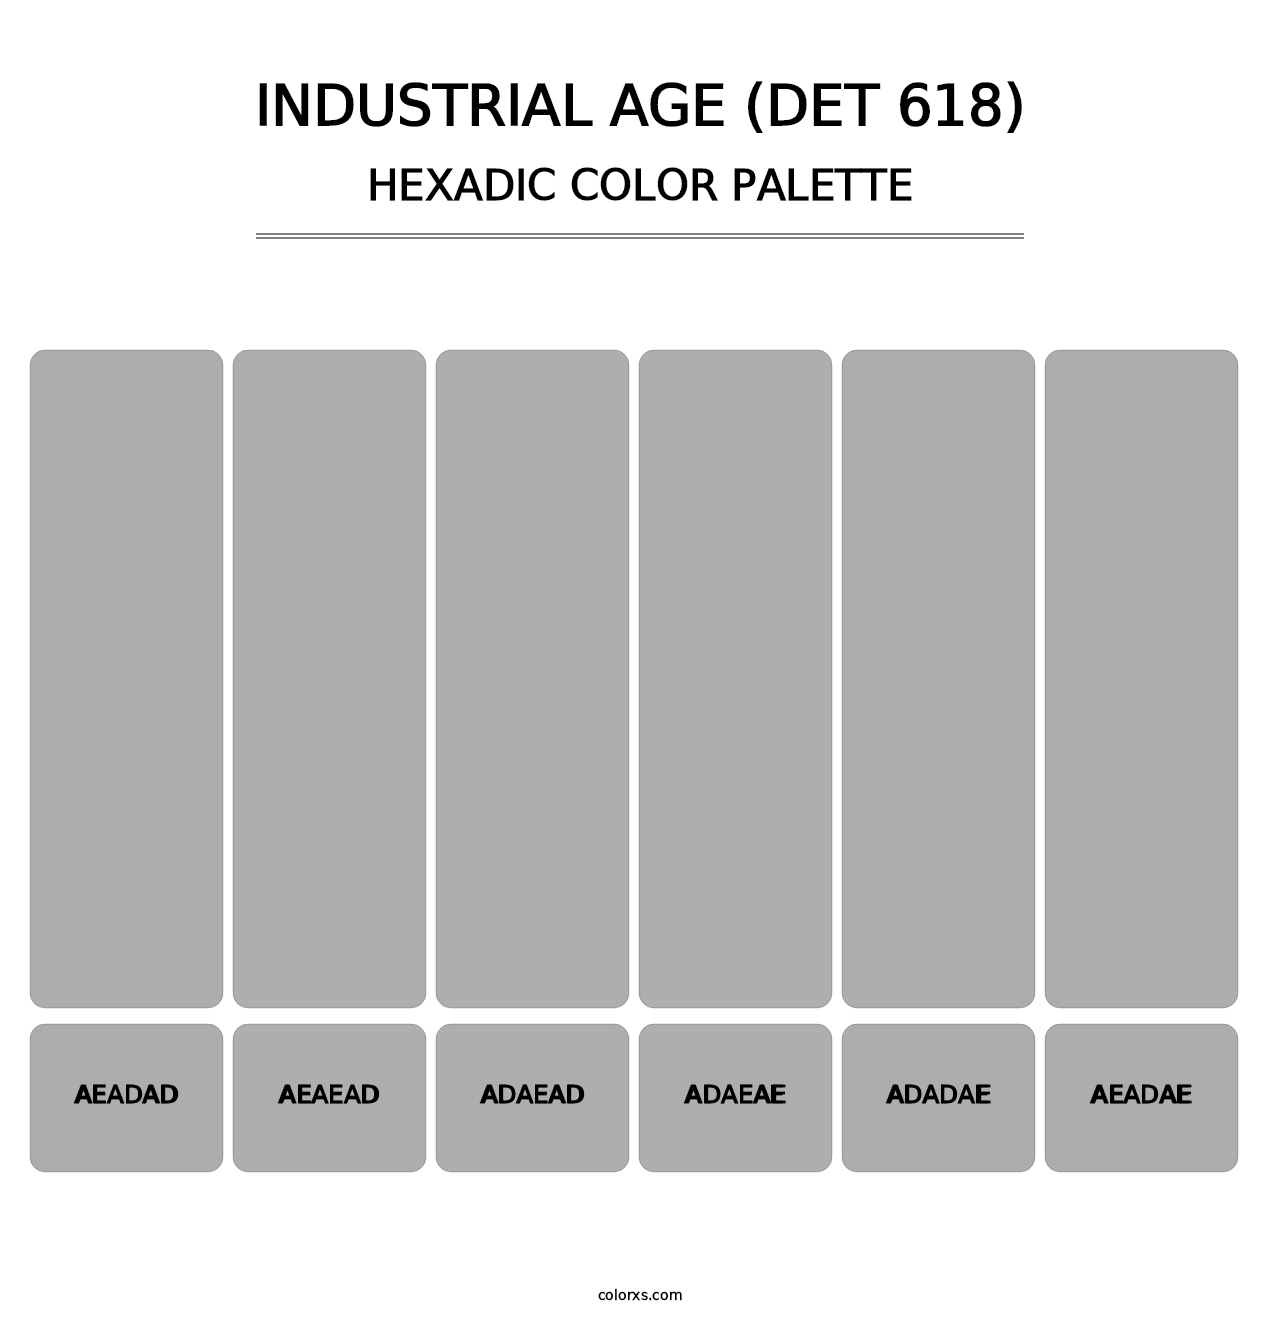 Industrial Age (DET 618) - Hexadic Color Palette